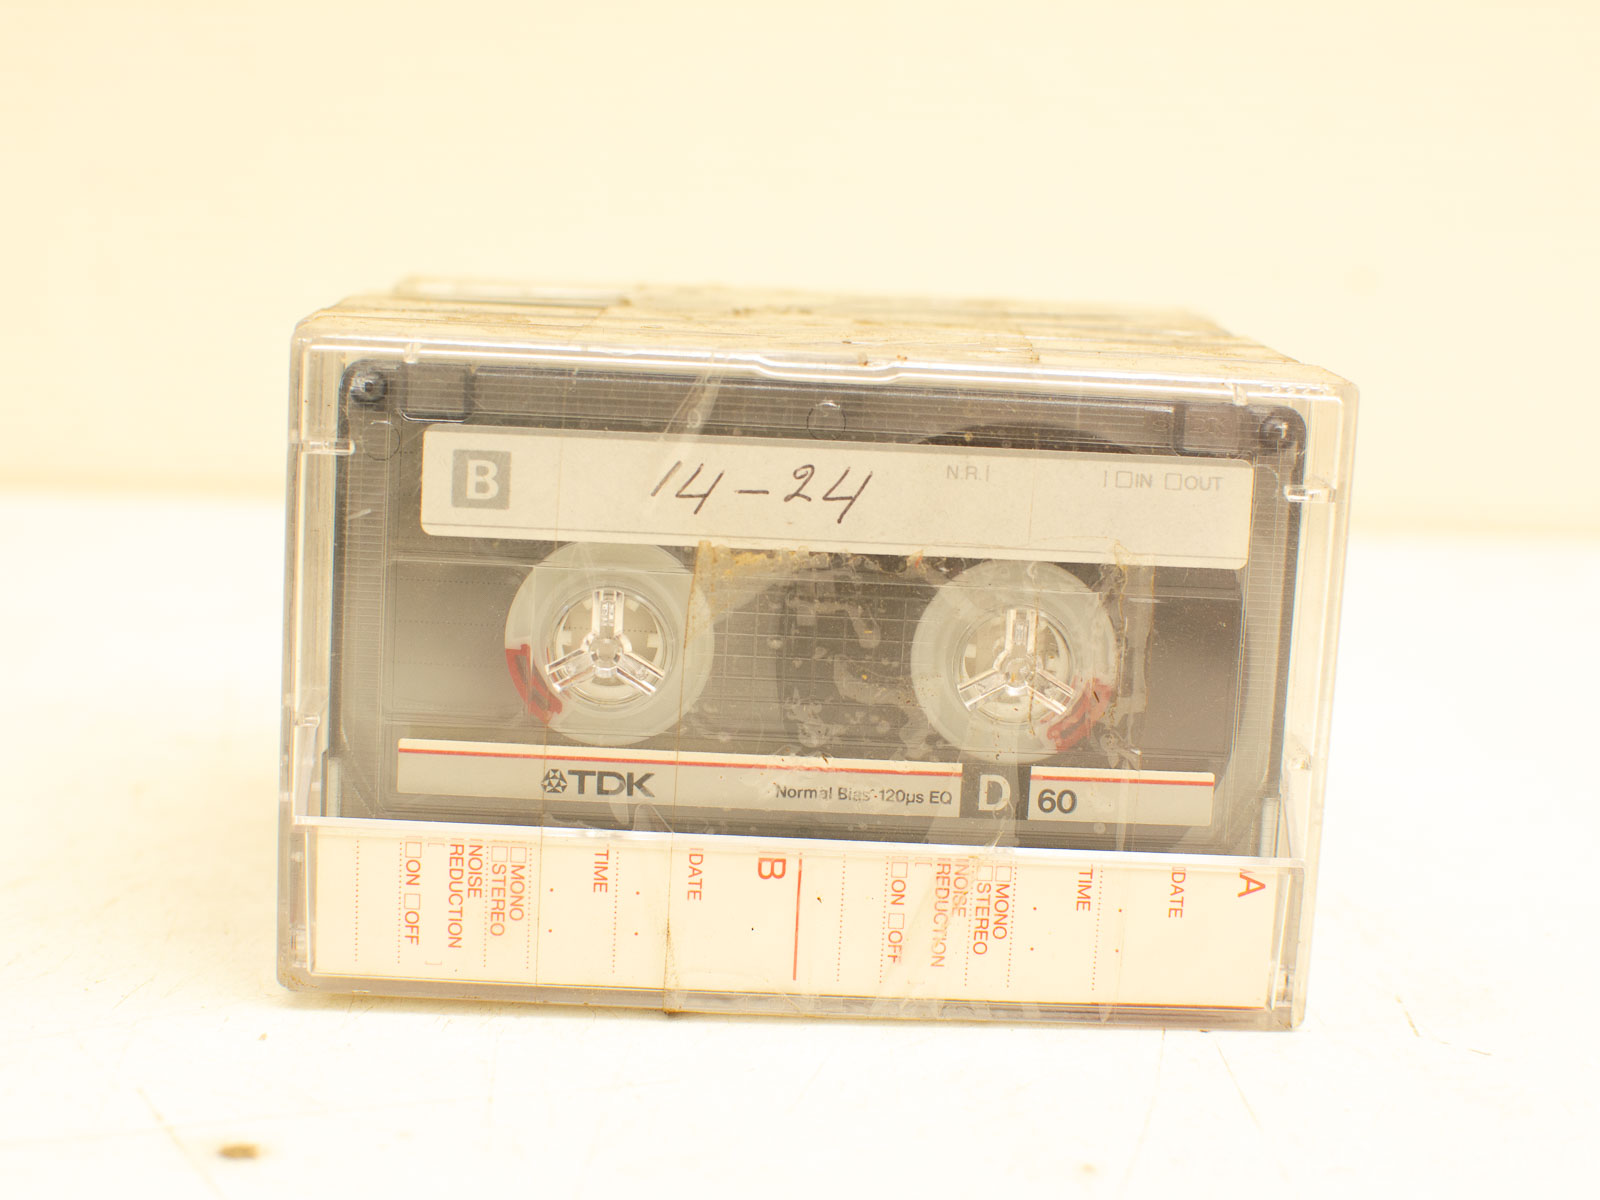 6 Tdk cassettebandjes 31275